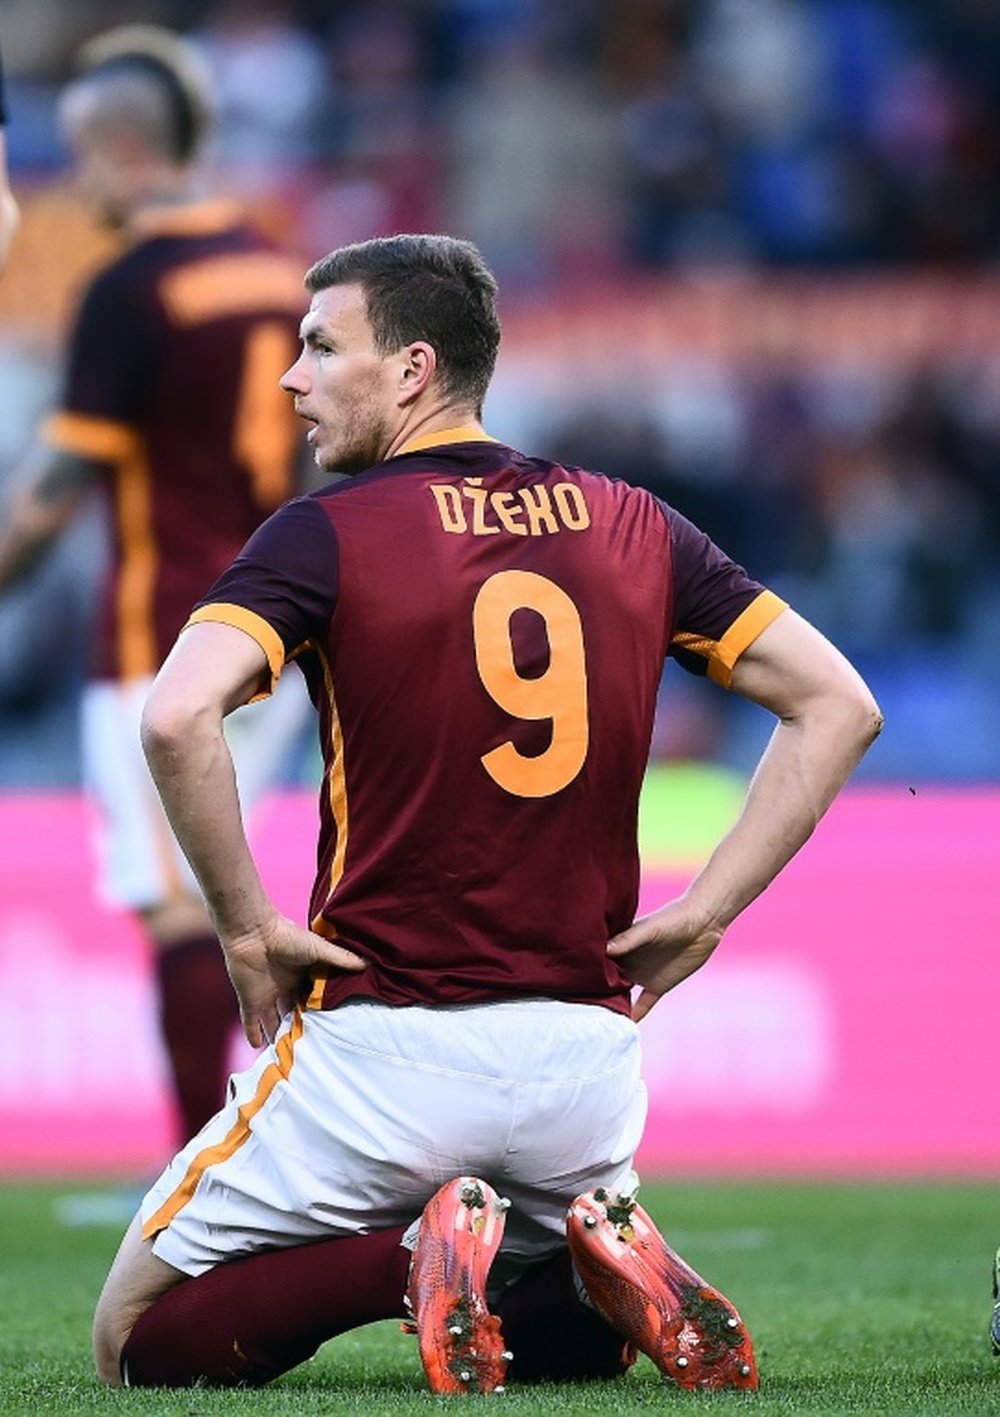 Roma striker Edin Dzeko will stay put at the club, according to his agent. BeSoccer